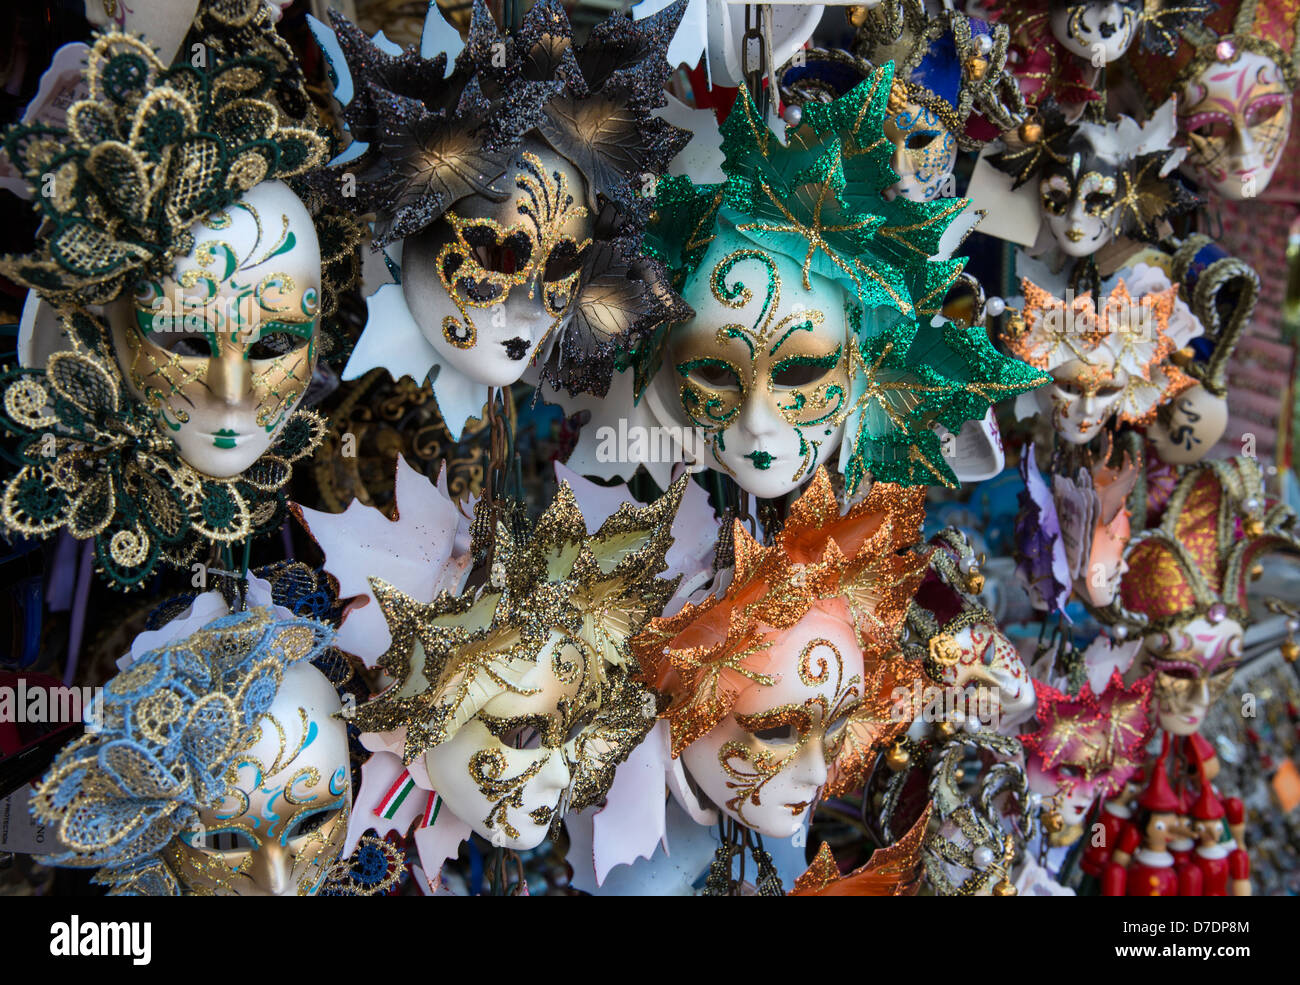 Exhibition of venetian carnival masks Stock Photo